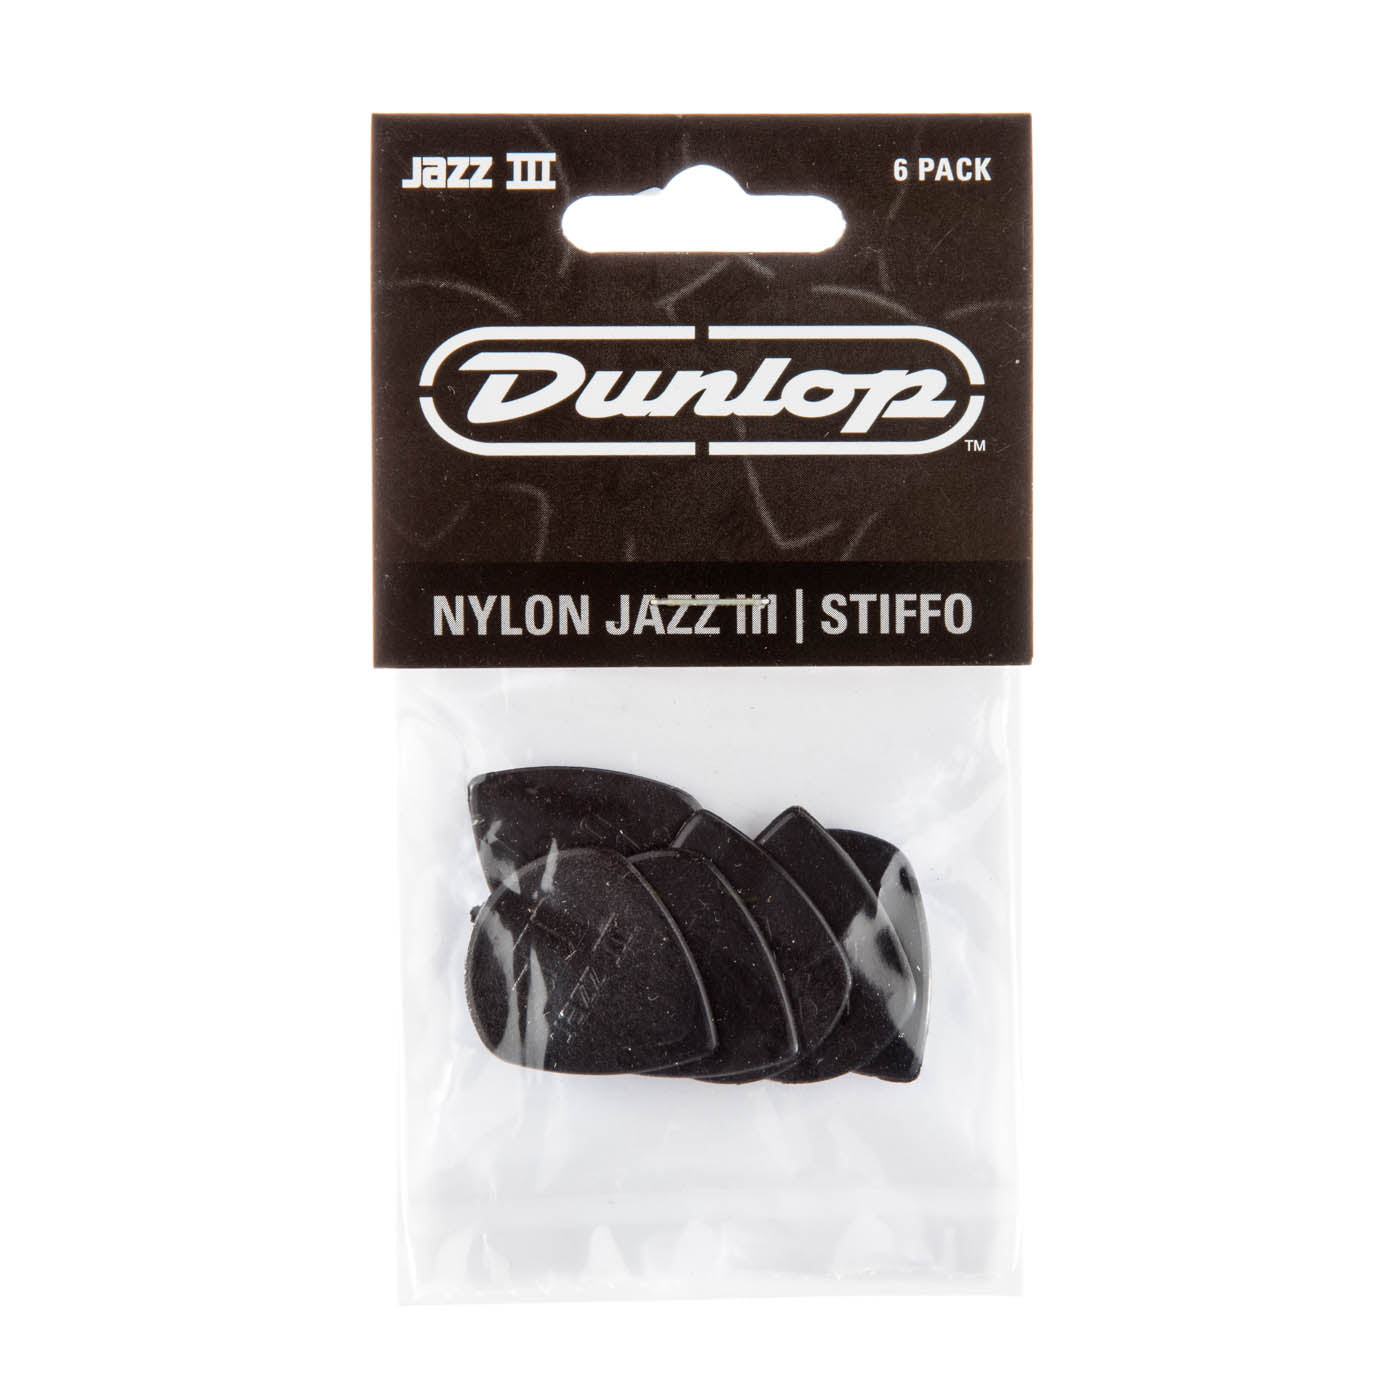 Dunlop Black Stiffo Nylon Jazz III Guitar Pick